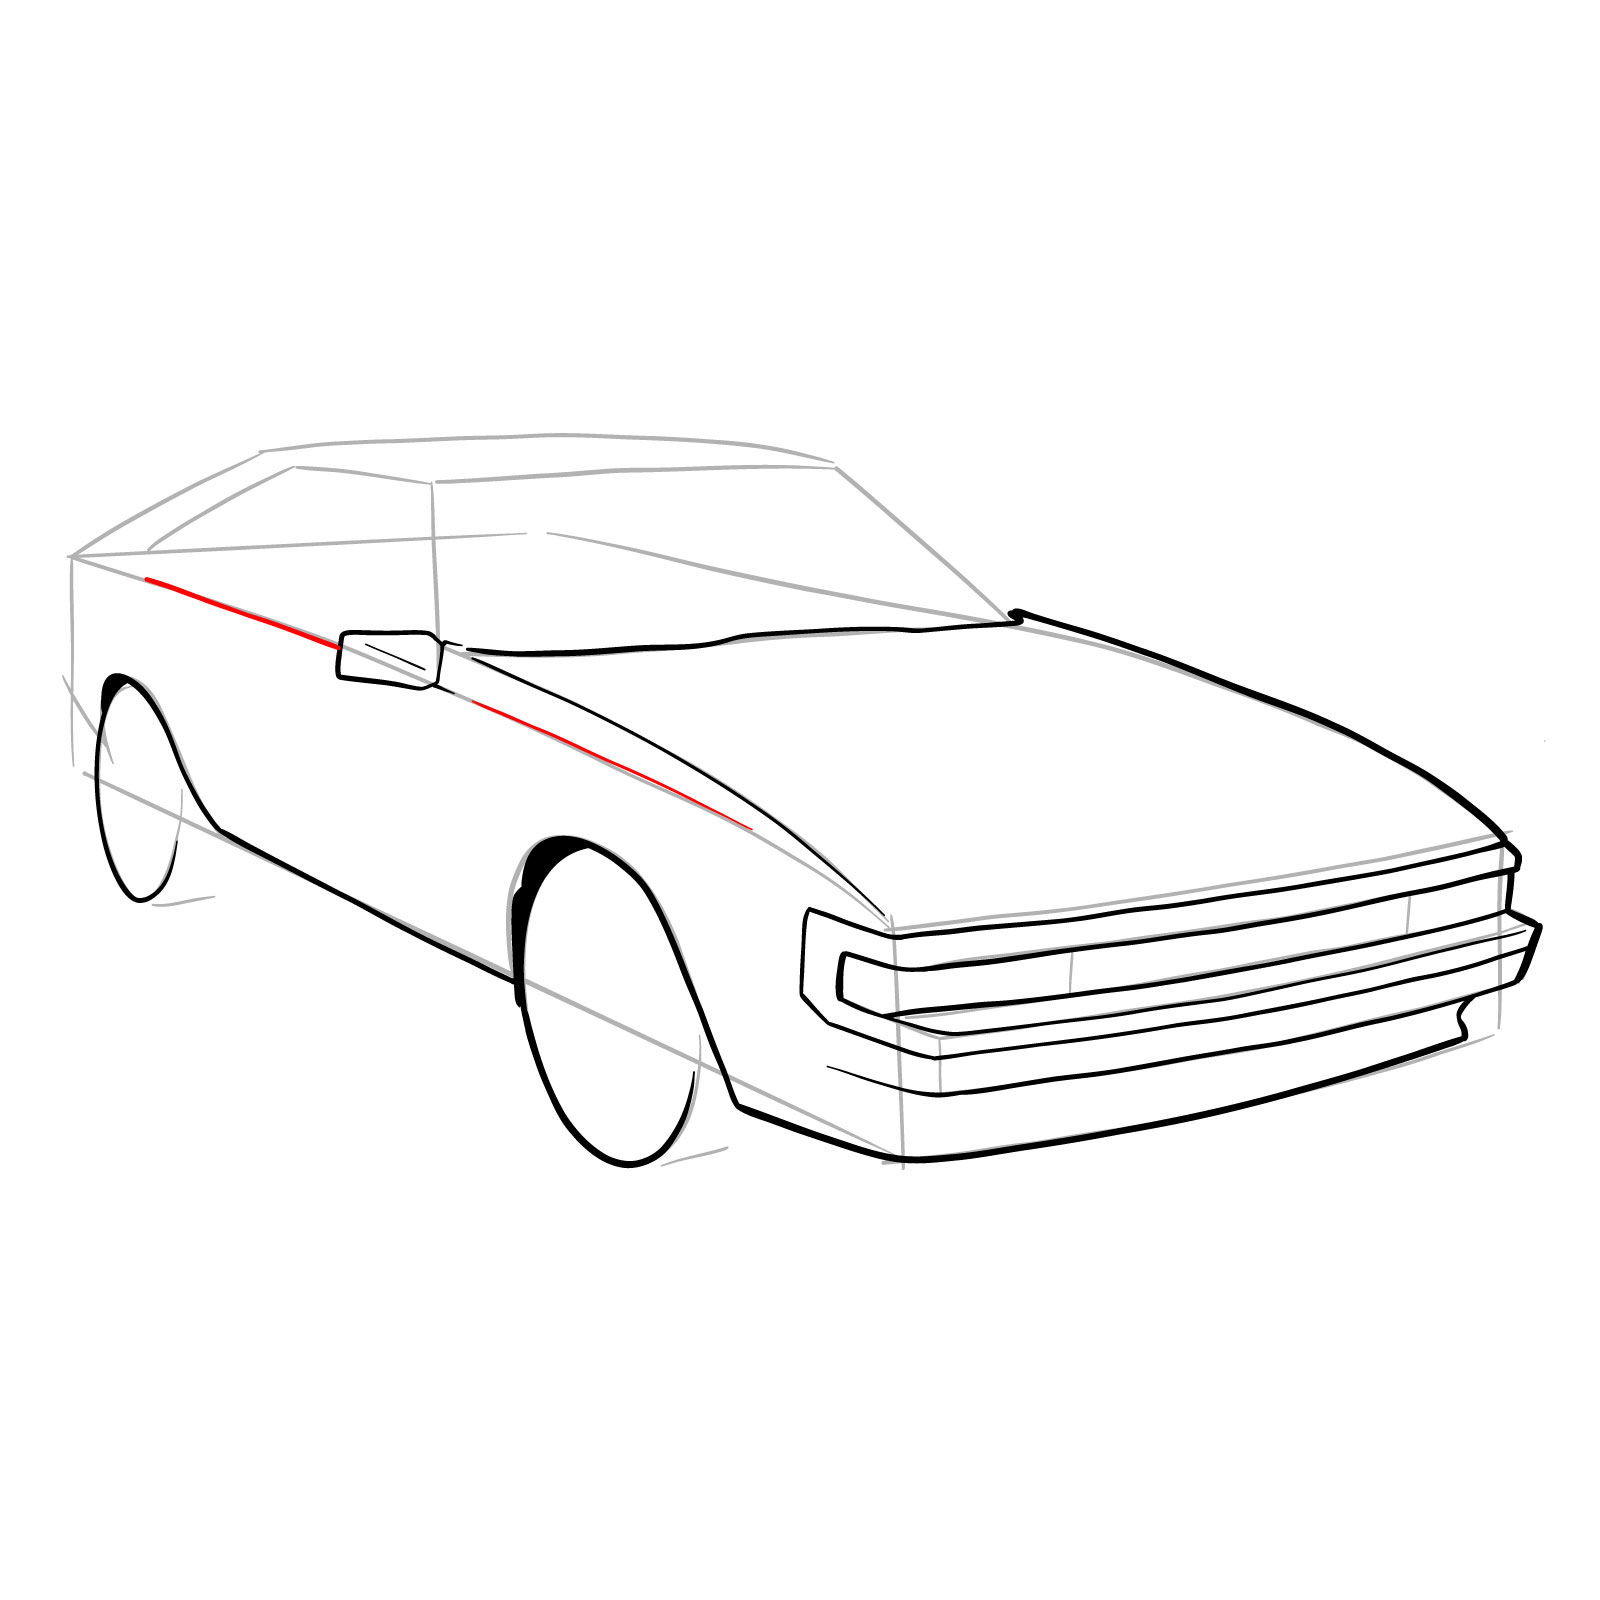 How to draw a 1985 Toyota Celica Supra P Type MK 2 - step 15